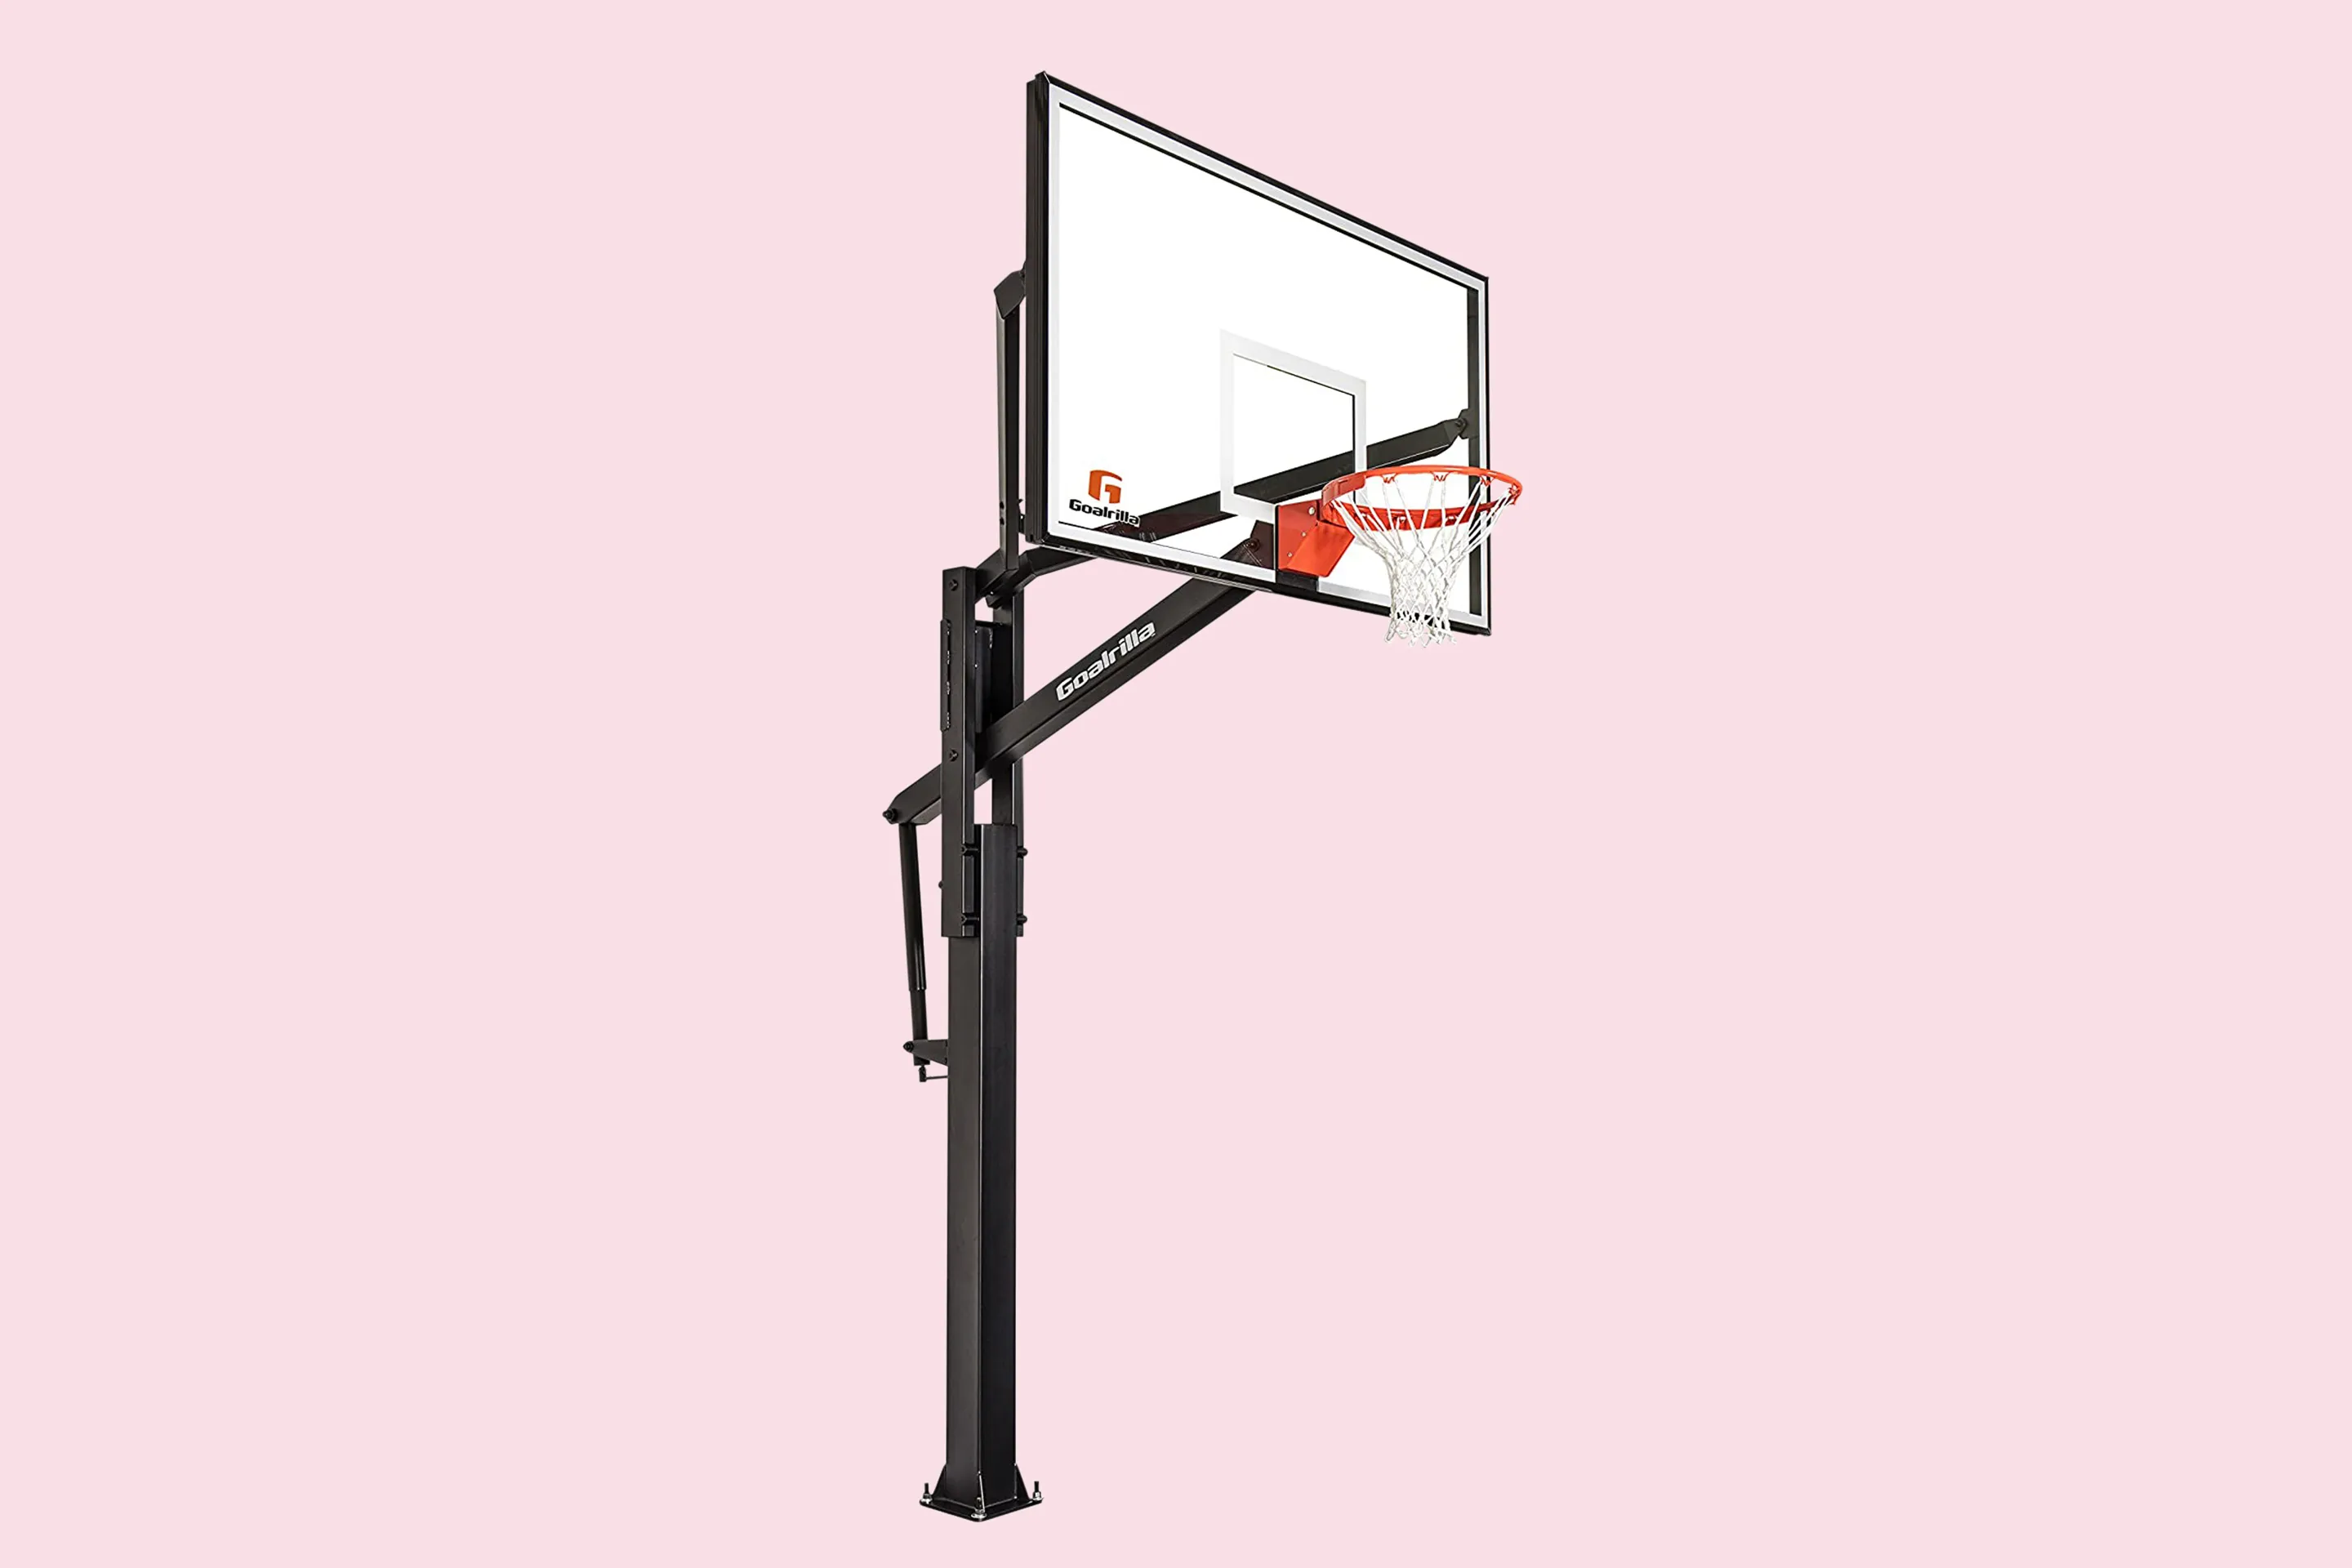 Shoot Again Indoor Basketball Hoop Set  Basketball bedroom, Basketball  room, Indoor basketball hoop